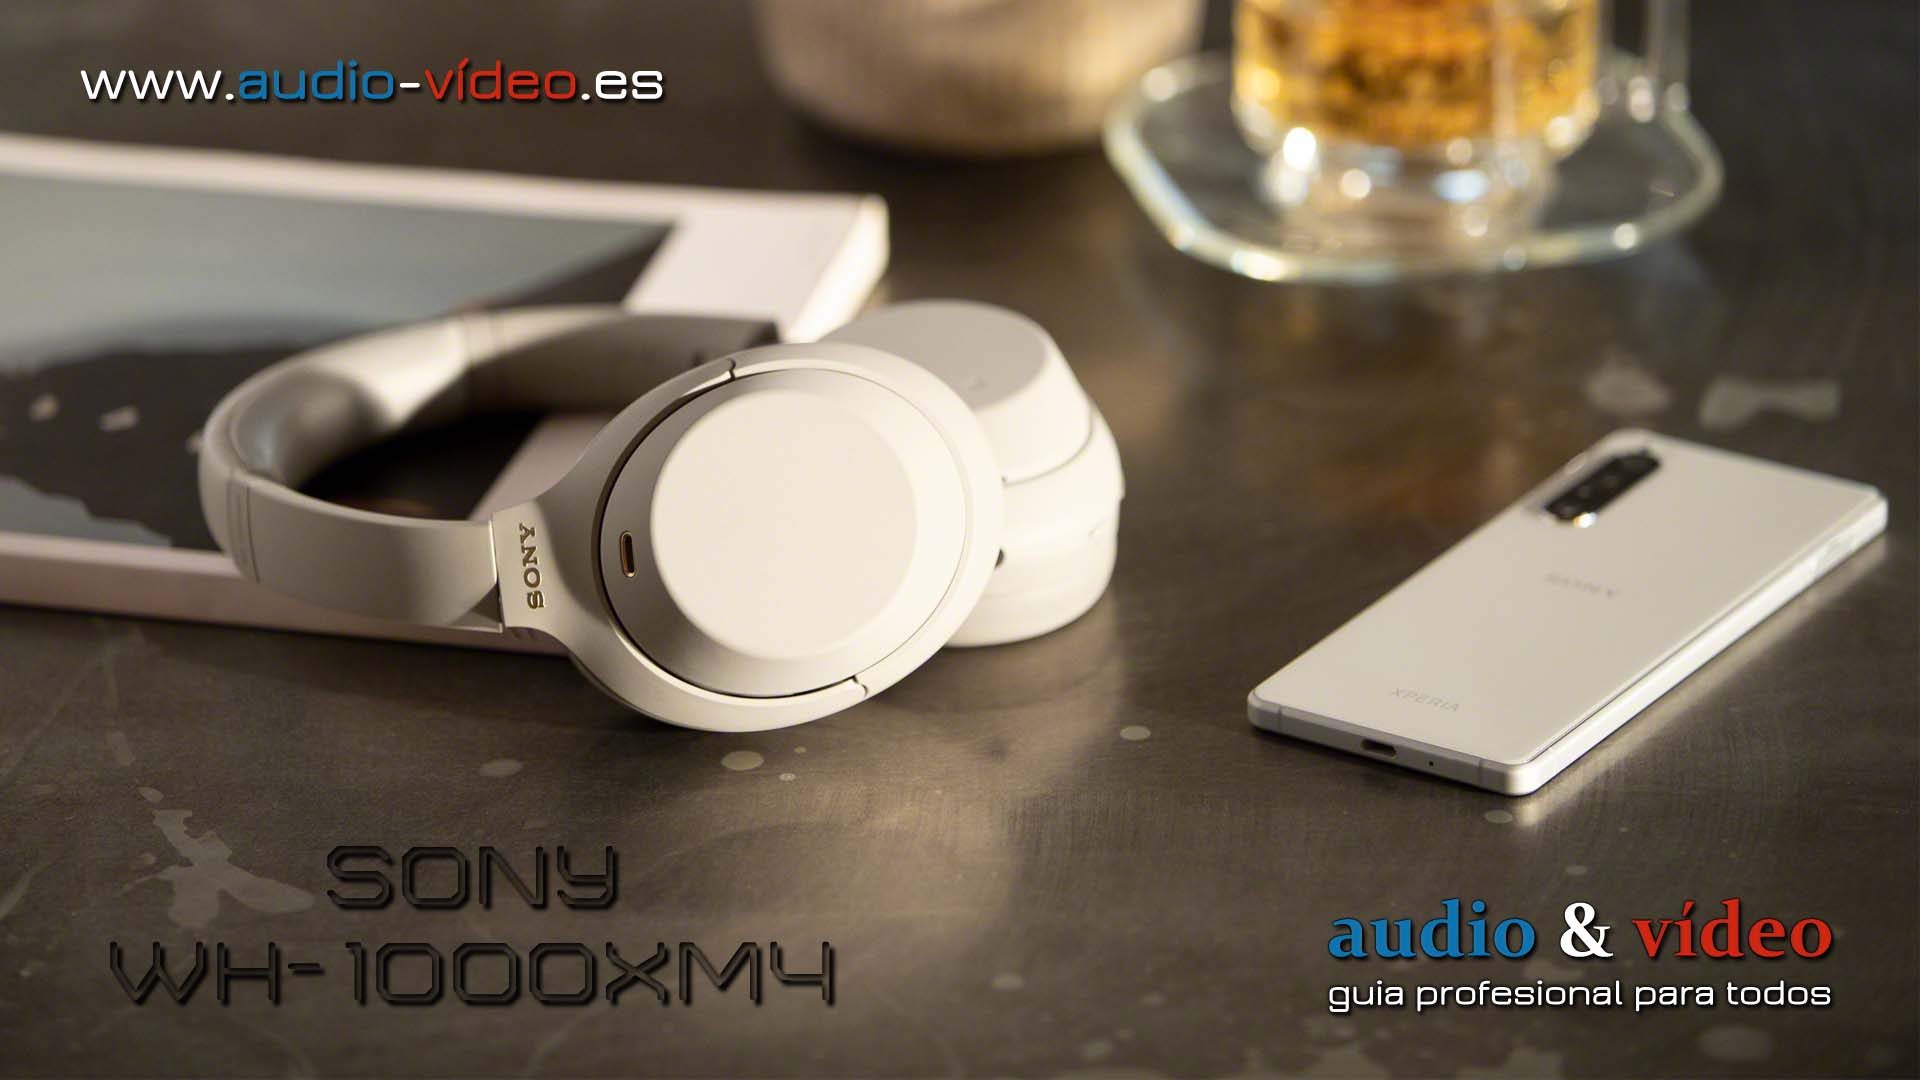 Sony anuncia los auriculares inalámbricos con Noise Cancelling WH-1000XM4